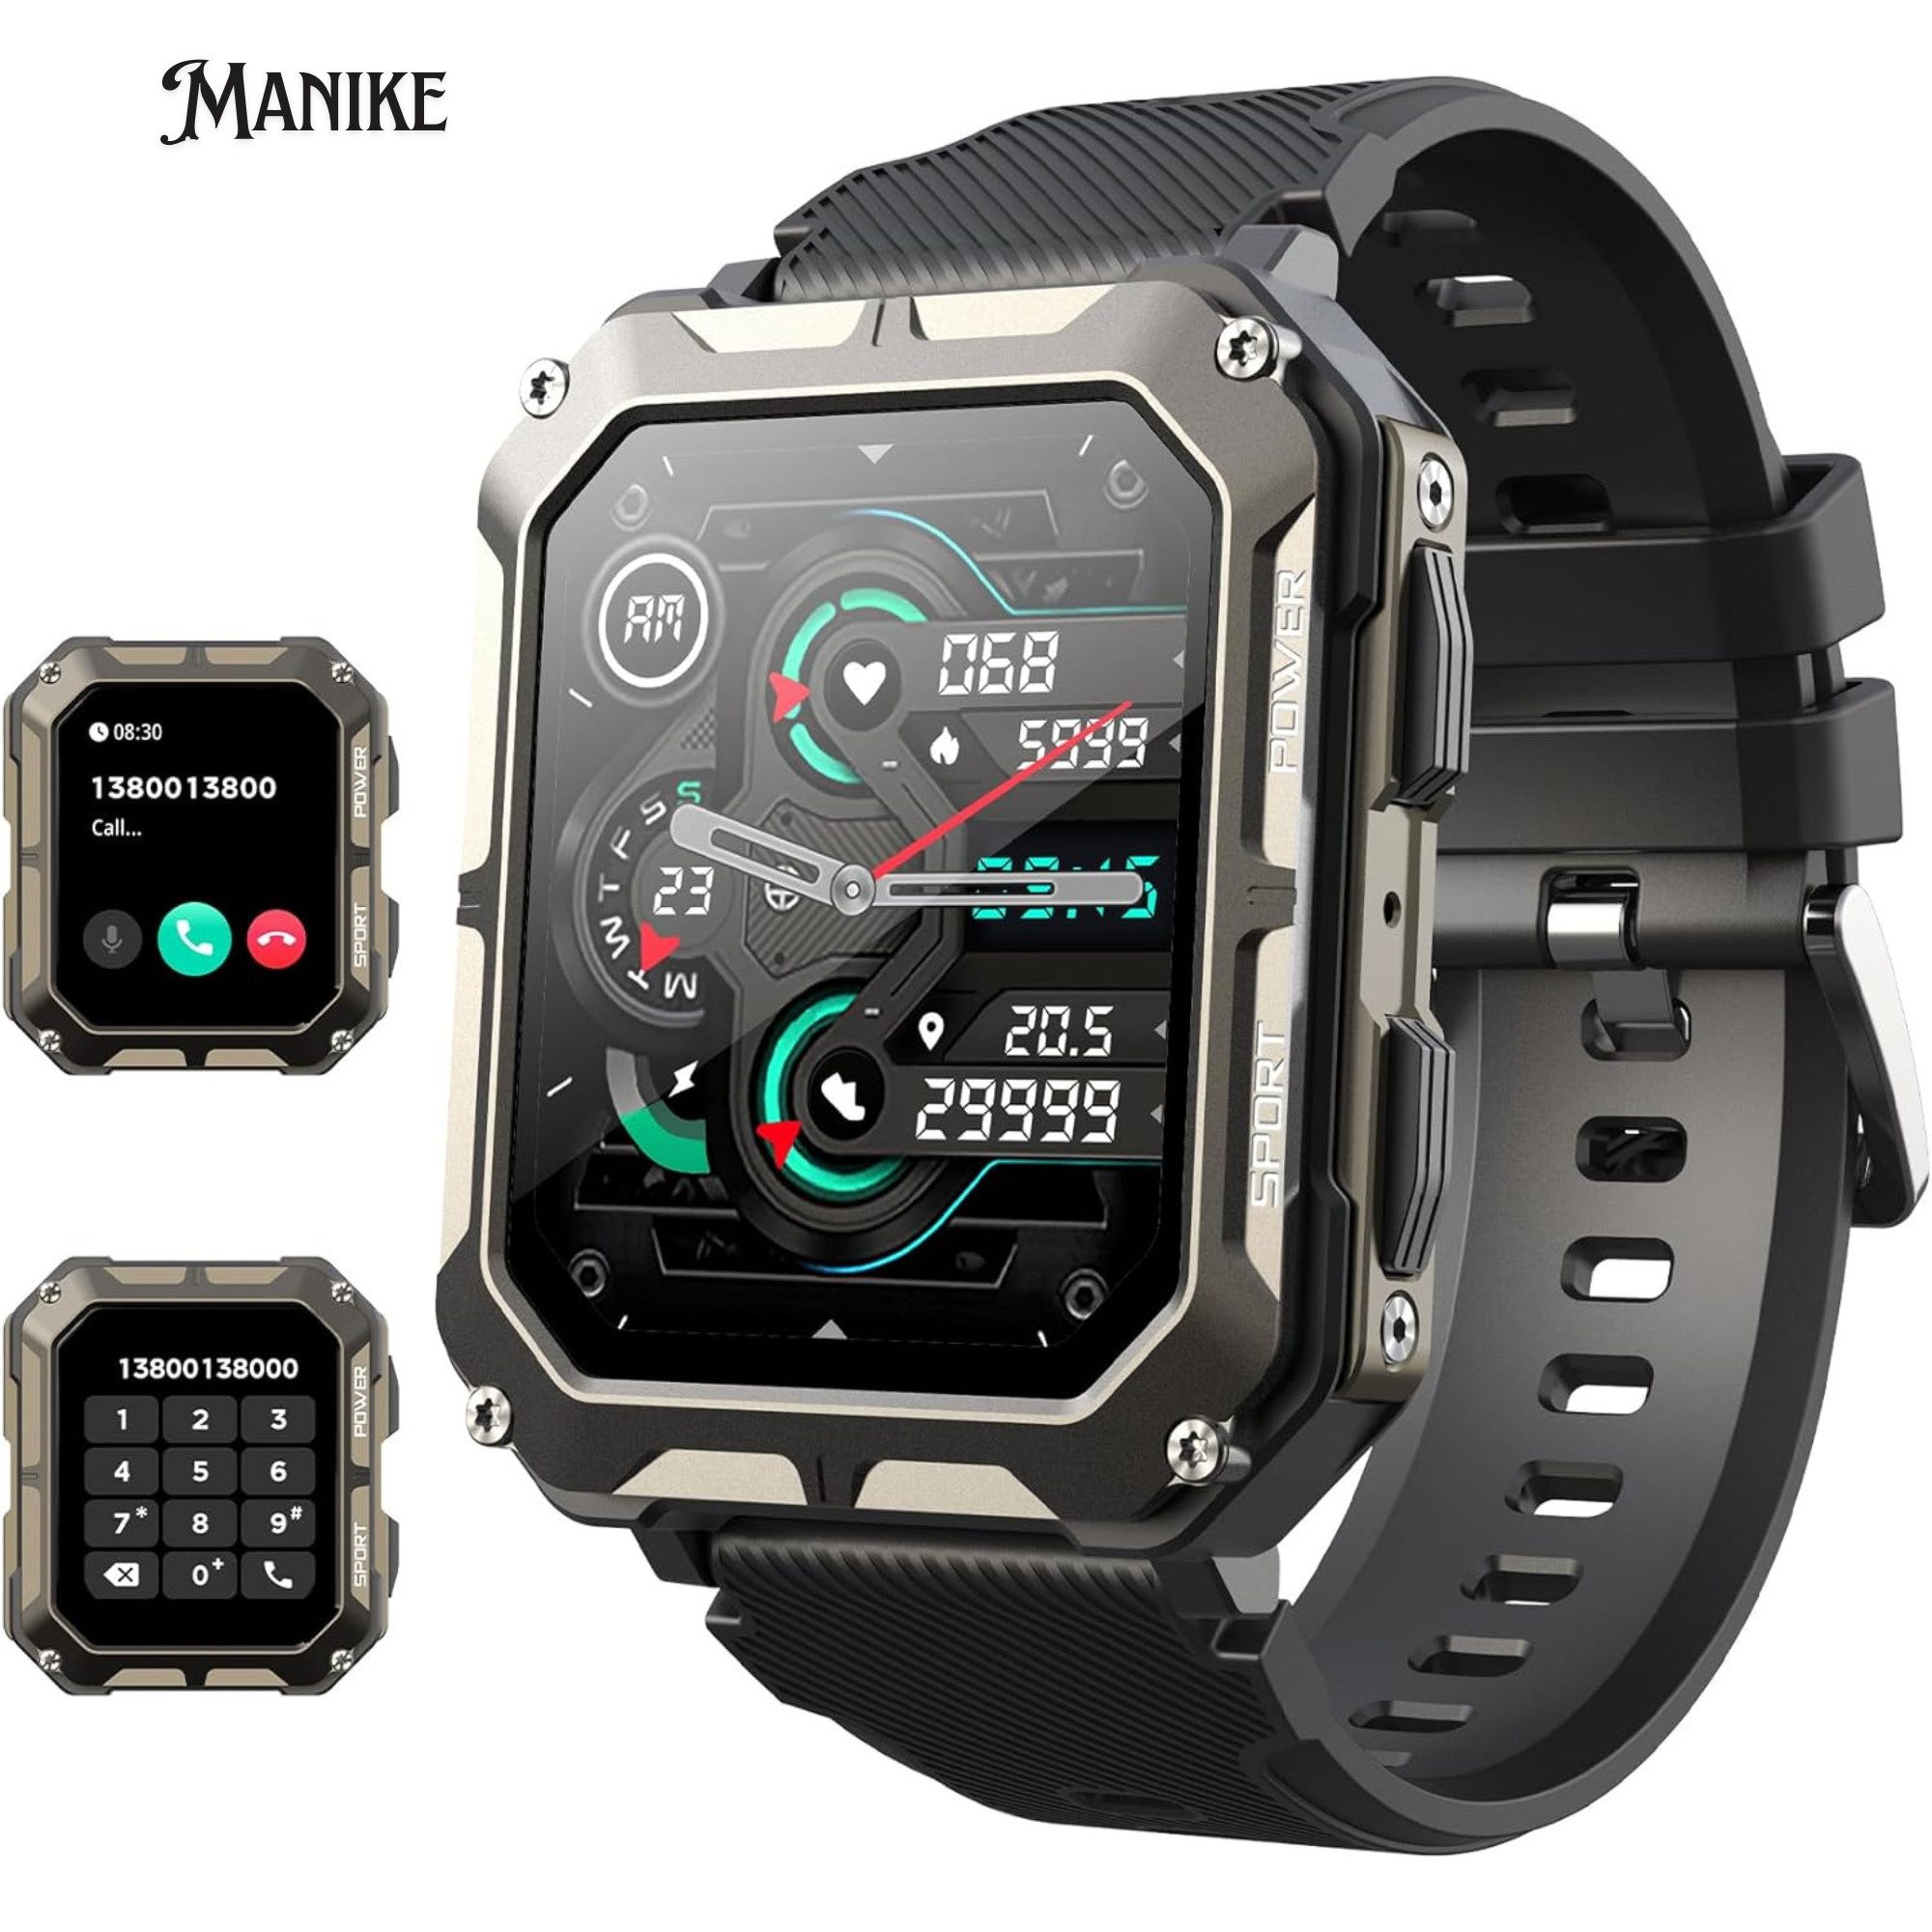 Manike C20 Smartwatch (4.3 Zoll), 1x Smartwatch, Manuals, 1xCharging Cable (USB), Silicone Band, IP68 Smartwatch, MP3-Wiedergabe, IP68 wasserdicht